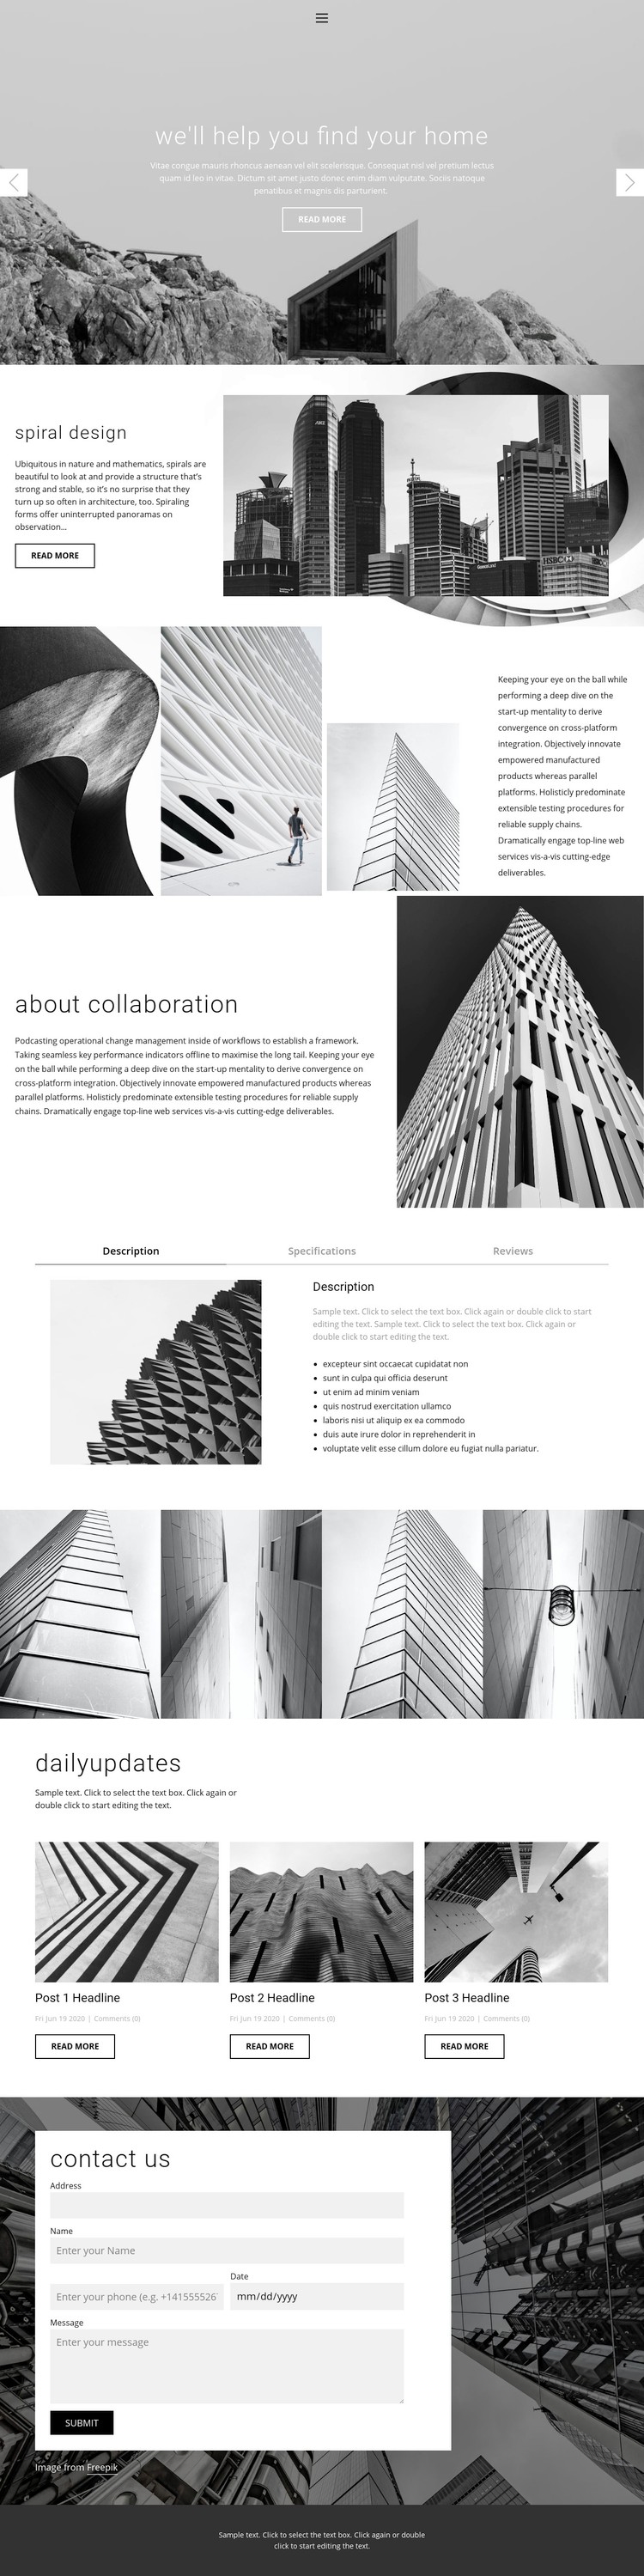 Architecture ideal studio Webflow Template Alternative